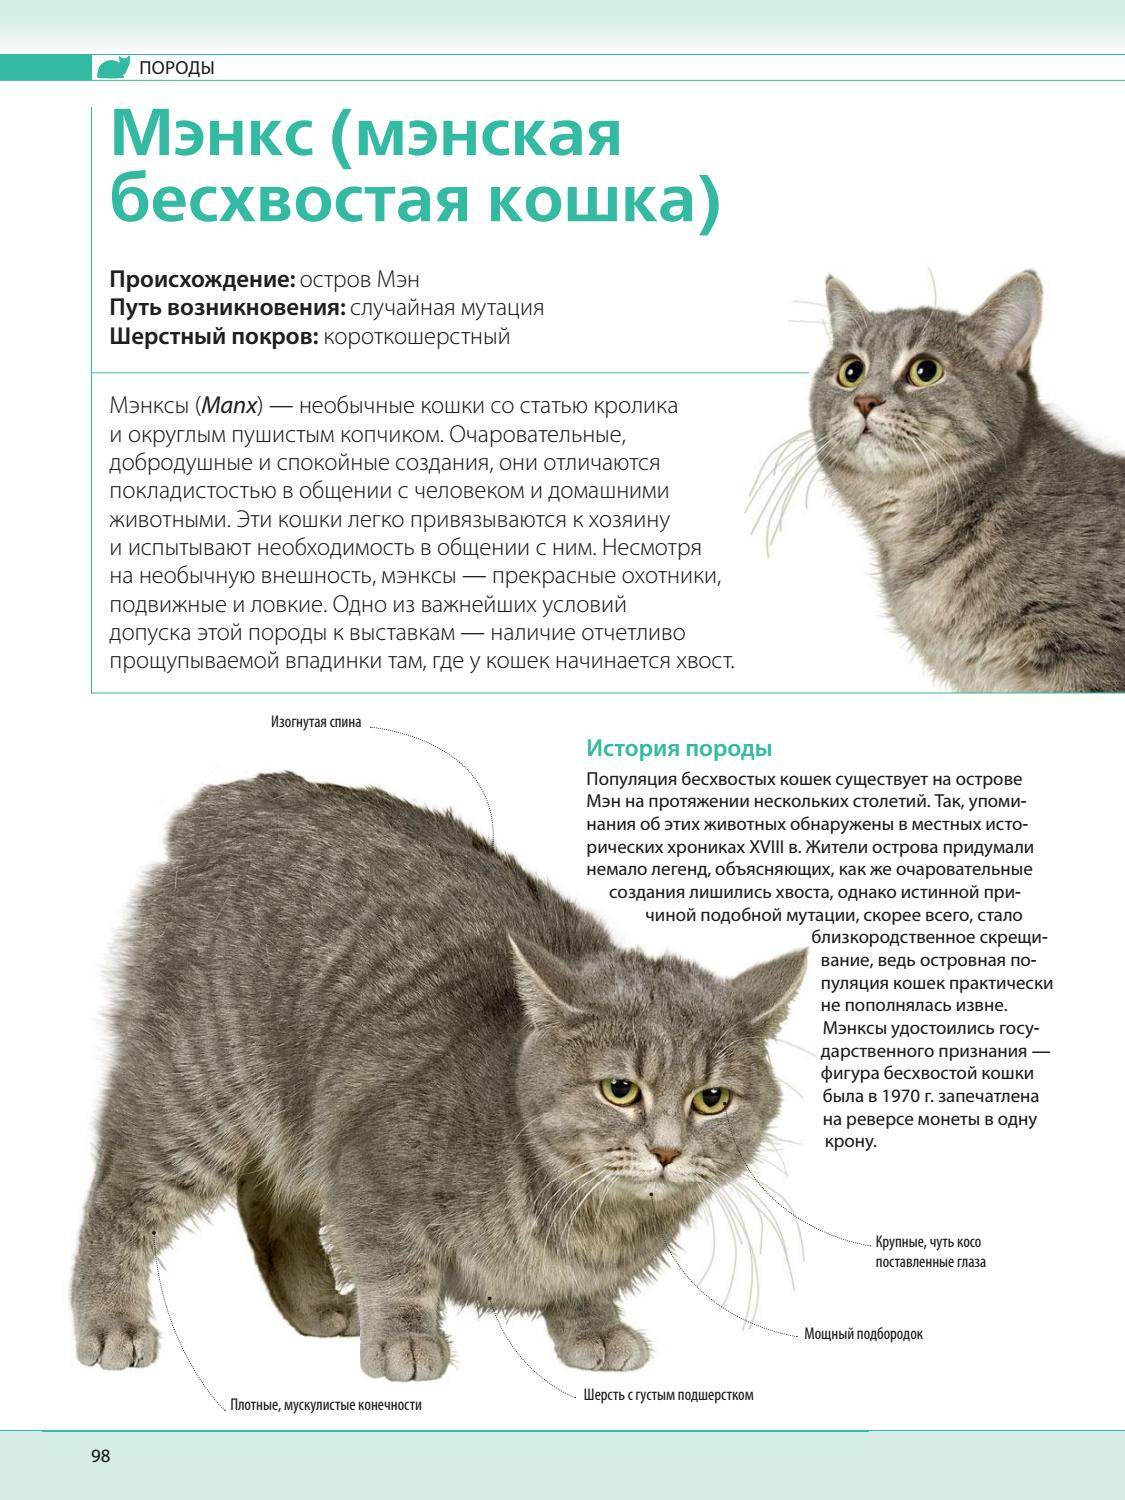 Корат (кошка): фото, описание породы и характер